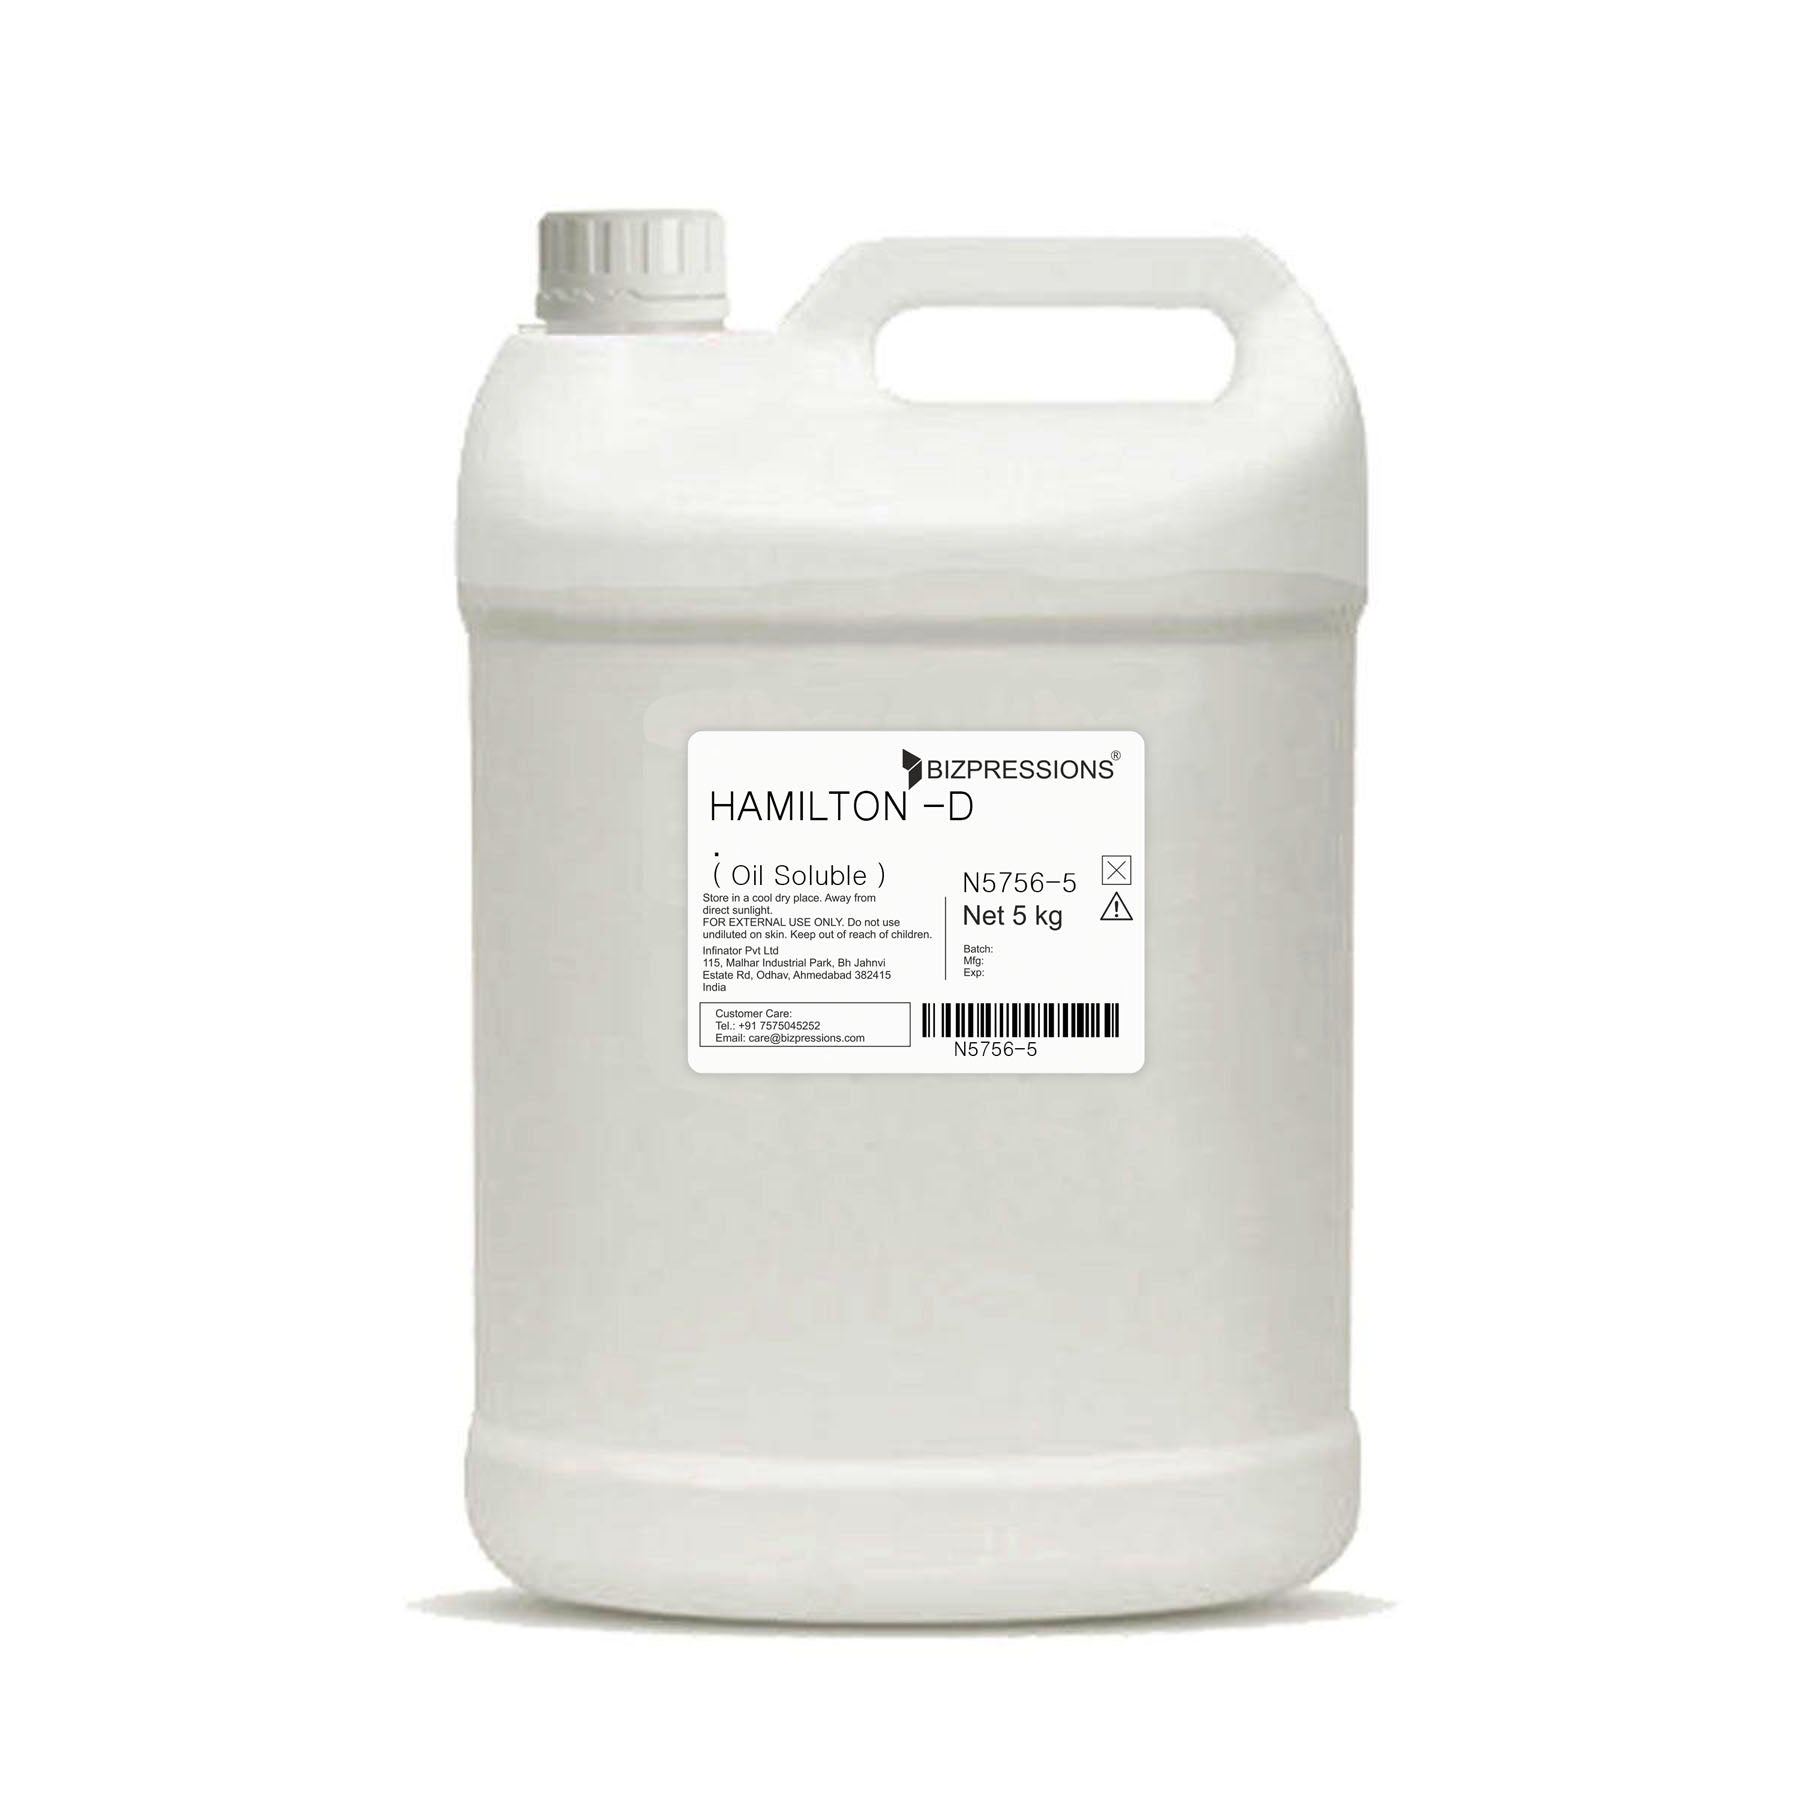 HAMILTON -D - Fragrance ( Oil Soluble ) - 5 kg